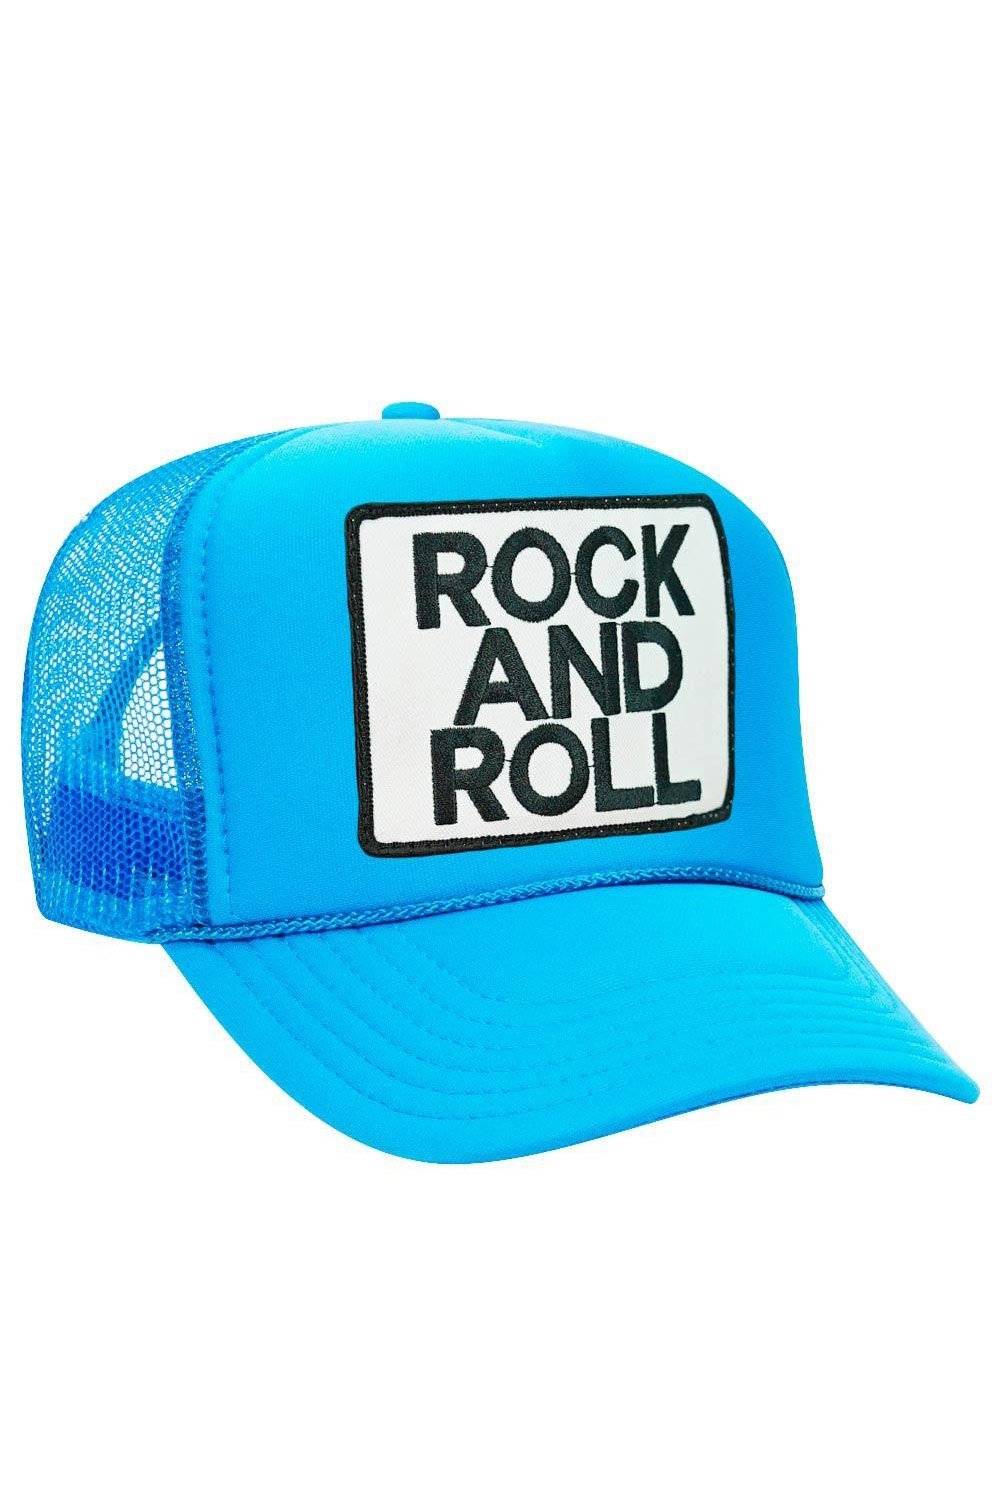 ROCK & ROLL VINTAGE TRUCKER HAT HATS Aviator Nation OS NEON BLUE 